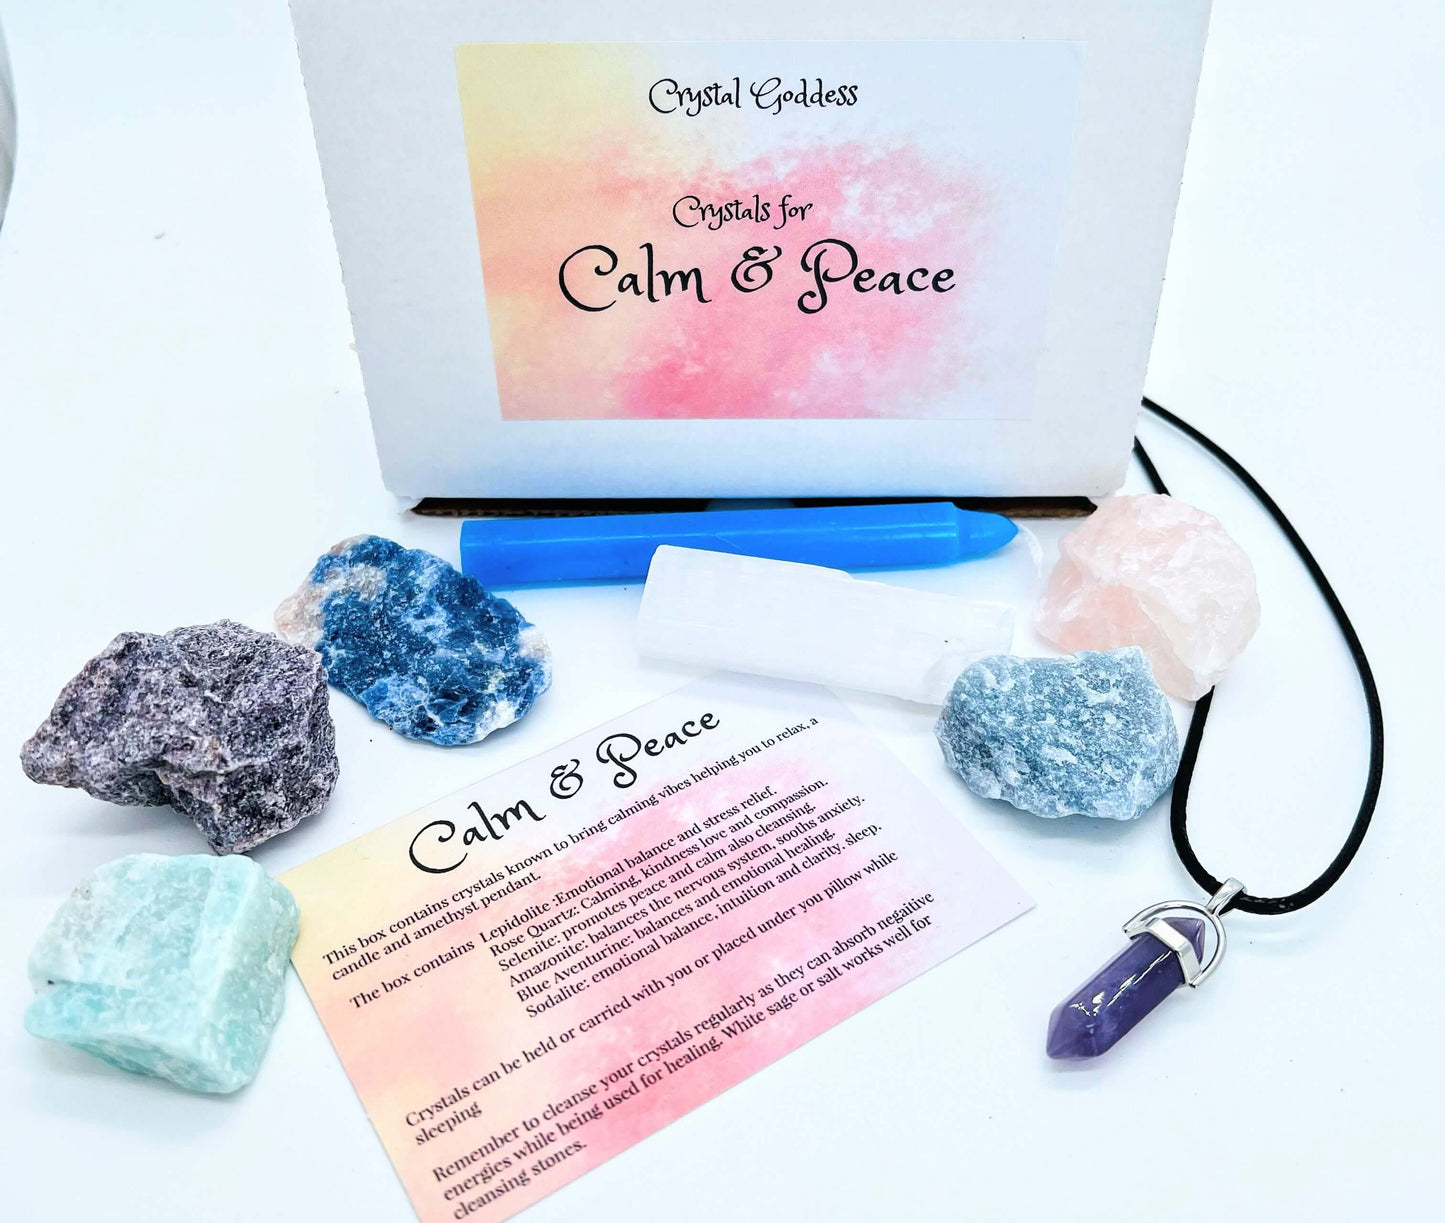 Calm & Peace Crystals Box